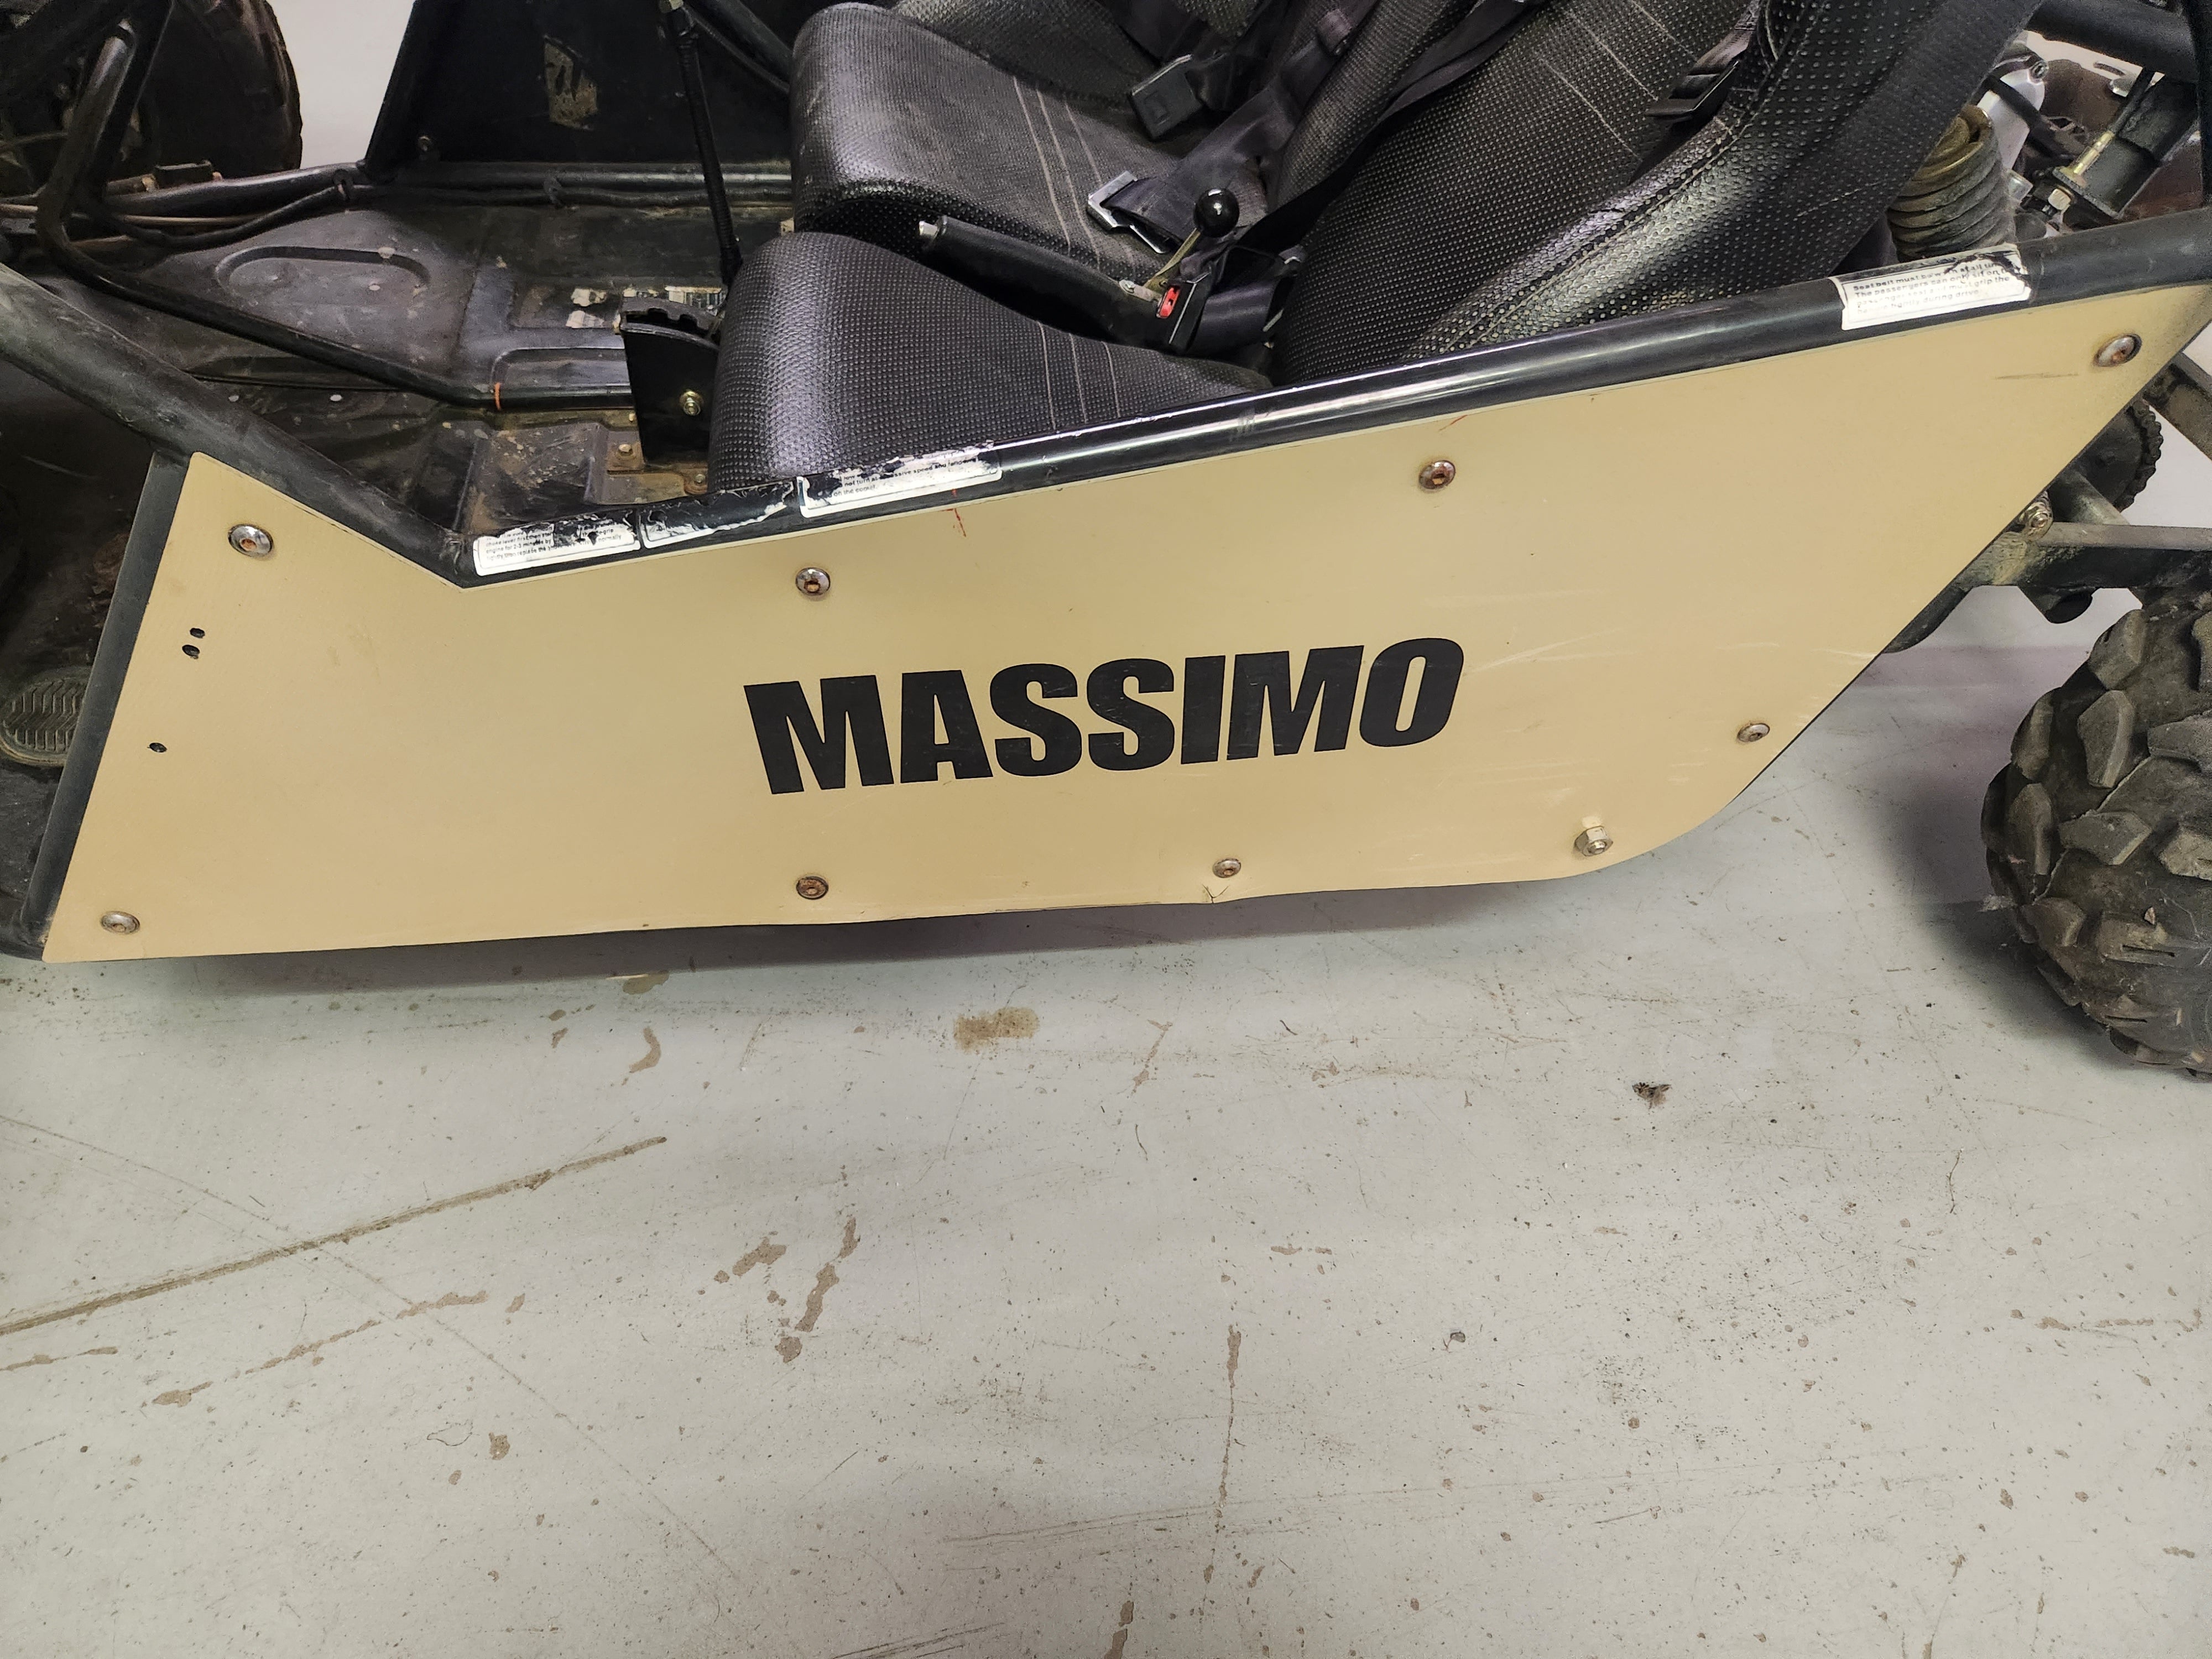 Massimo GMK 200 Go Kart